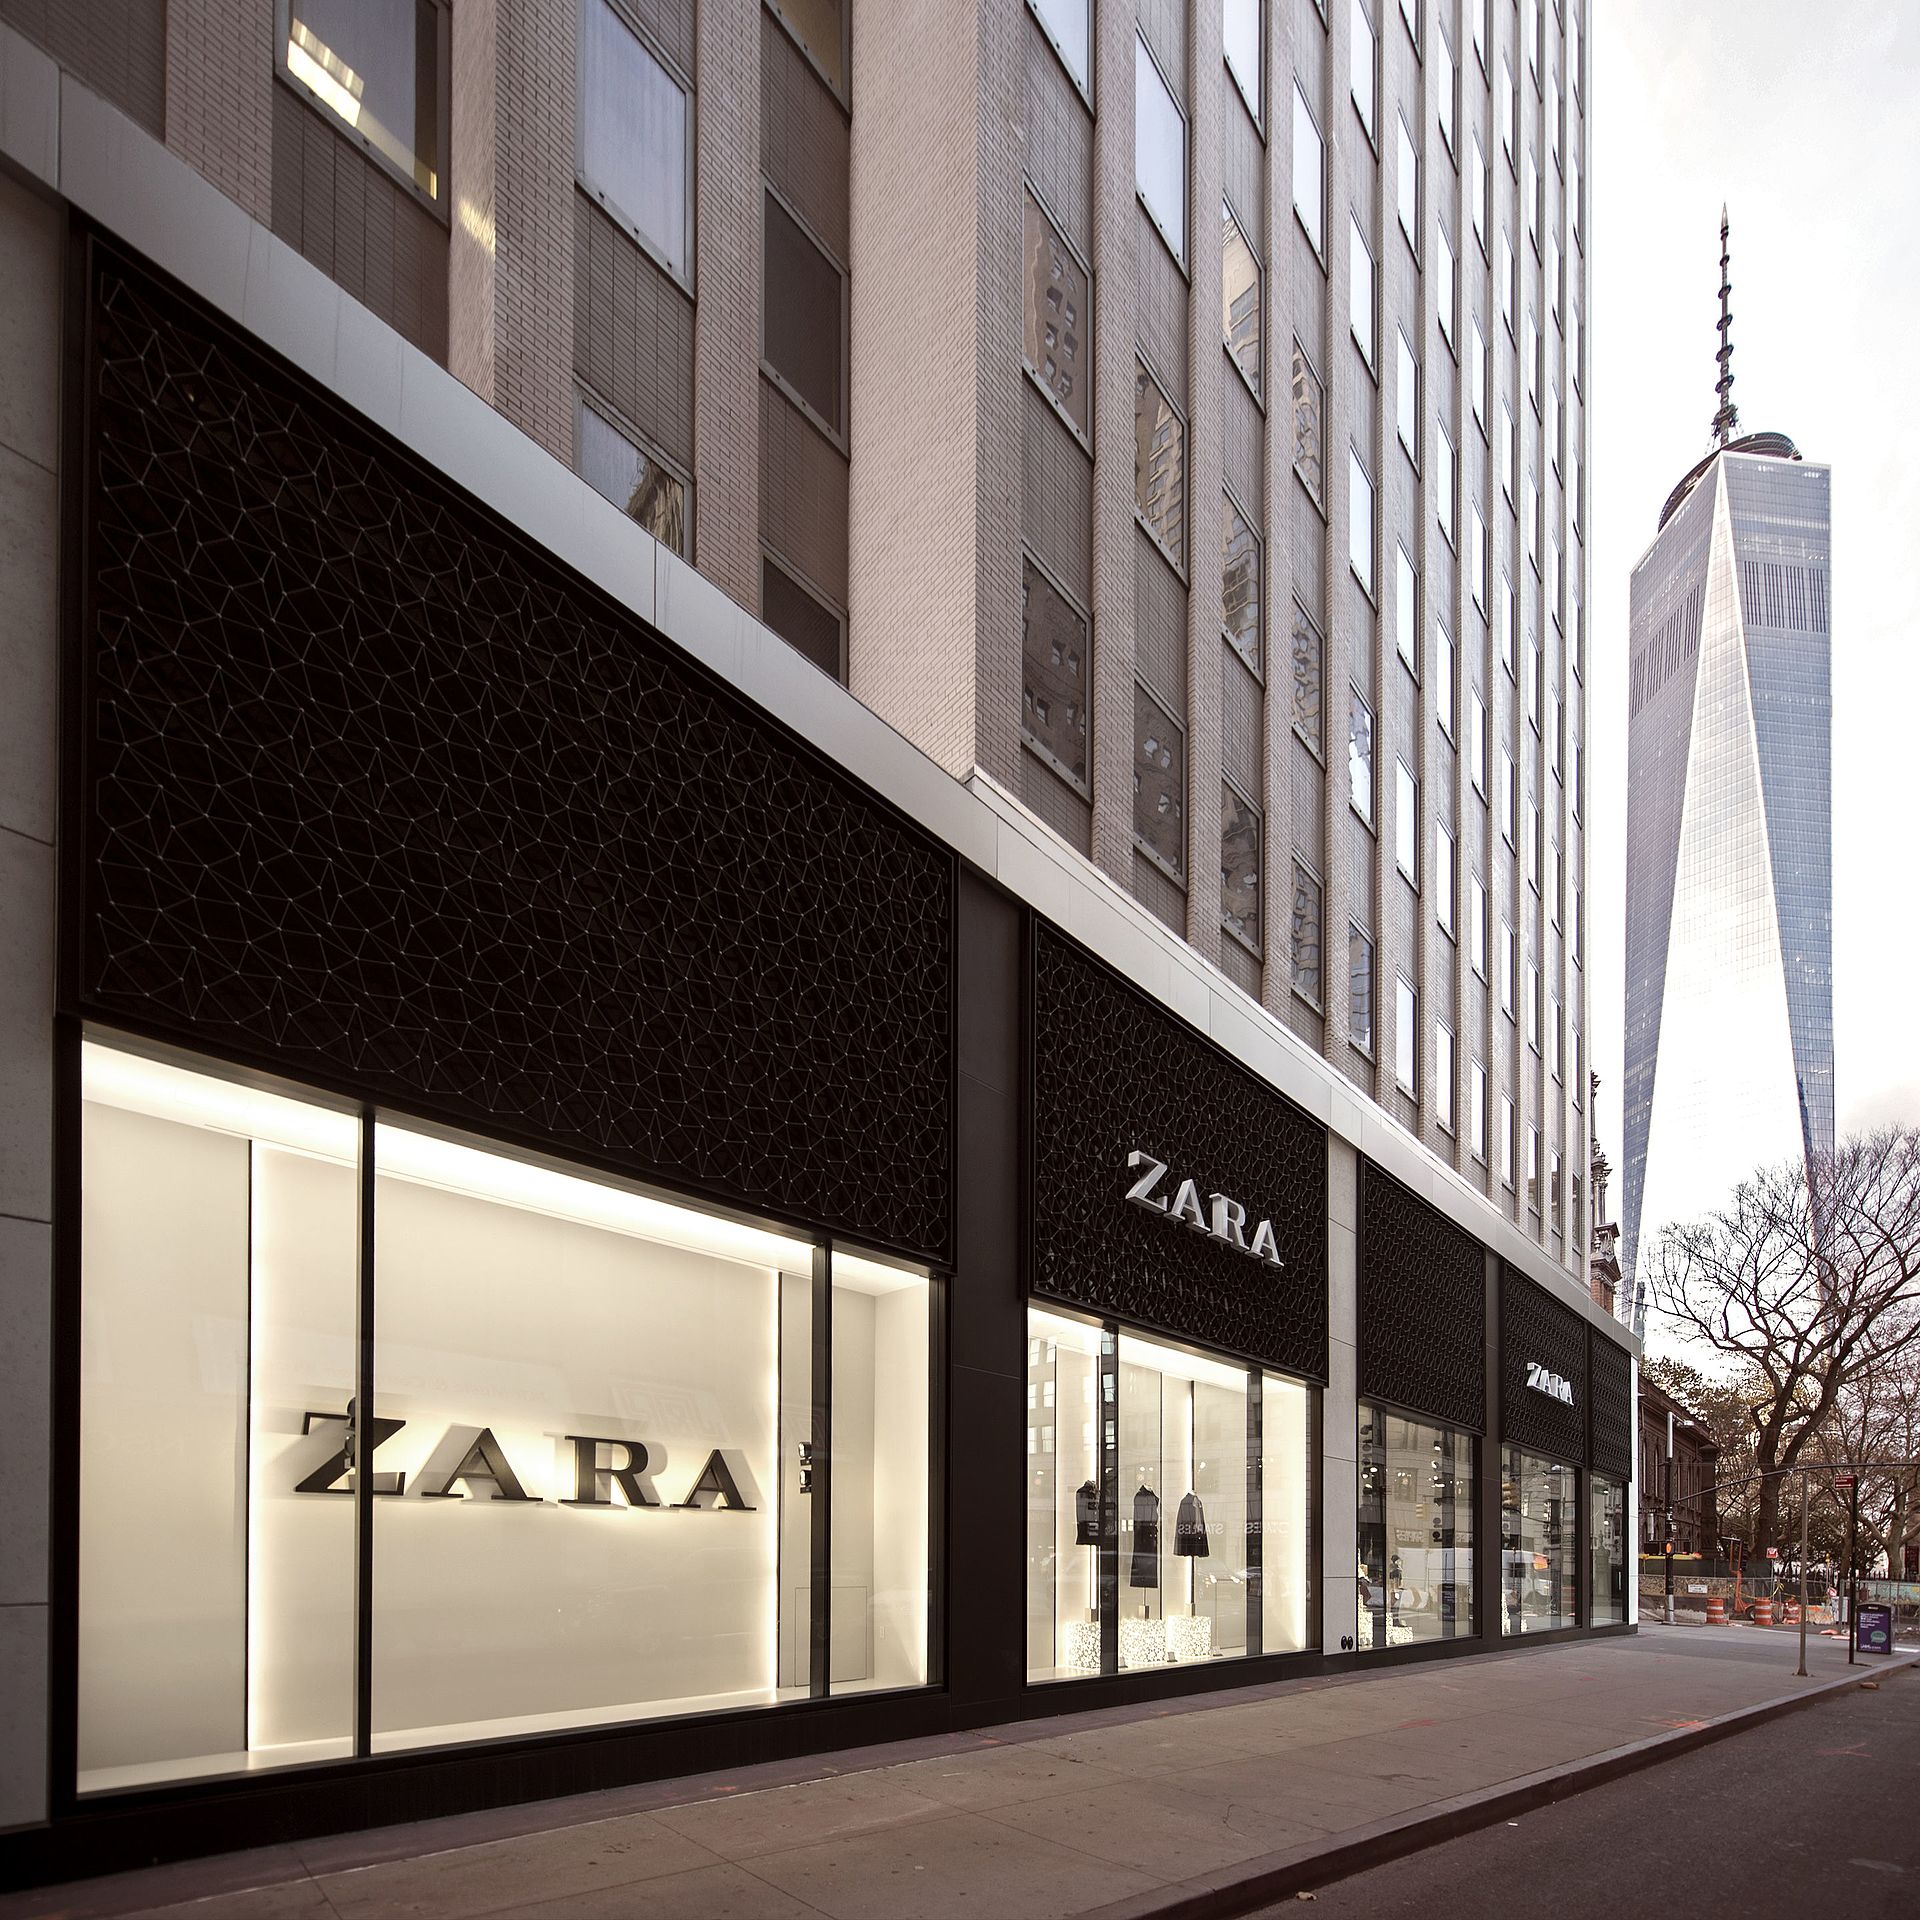 Zara store in New York City, near One World Trade Center